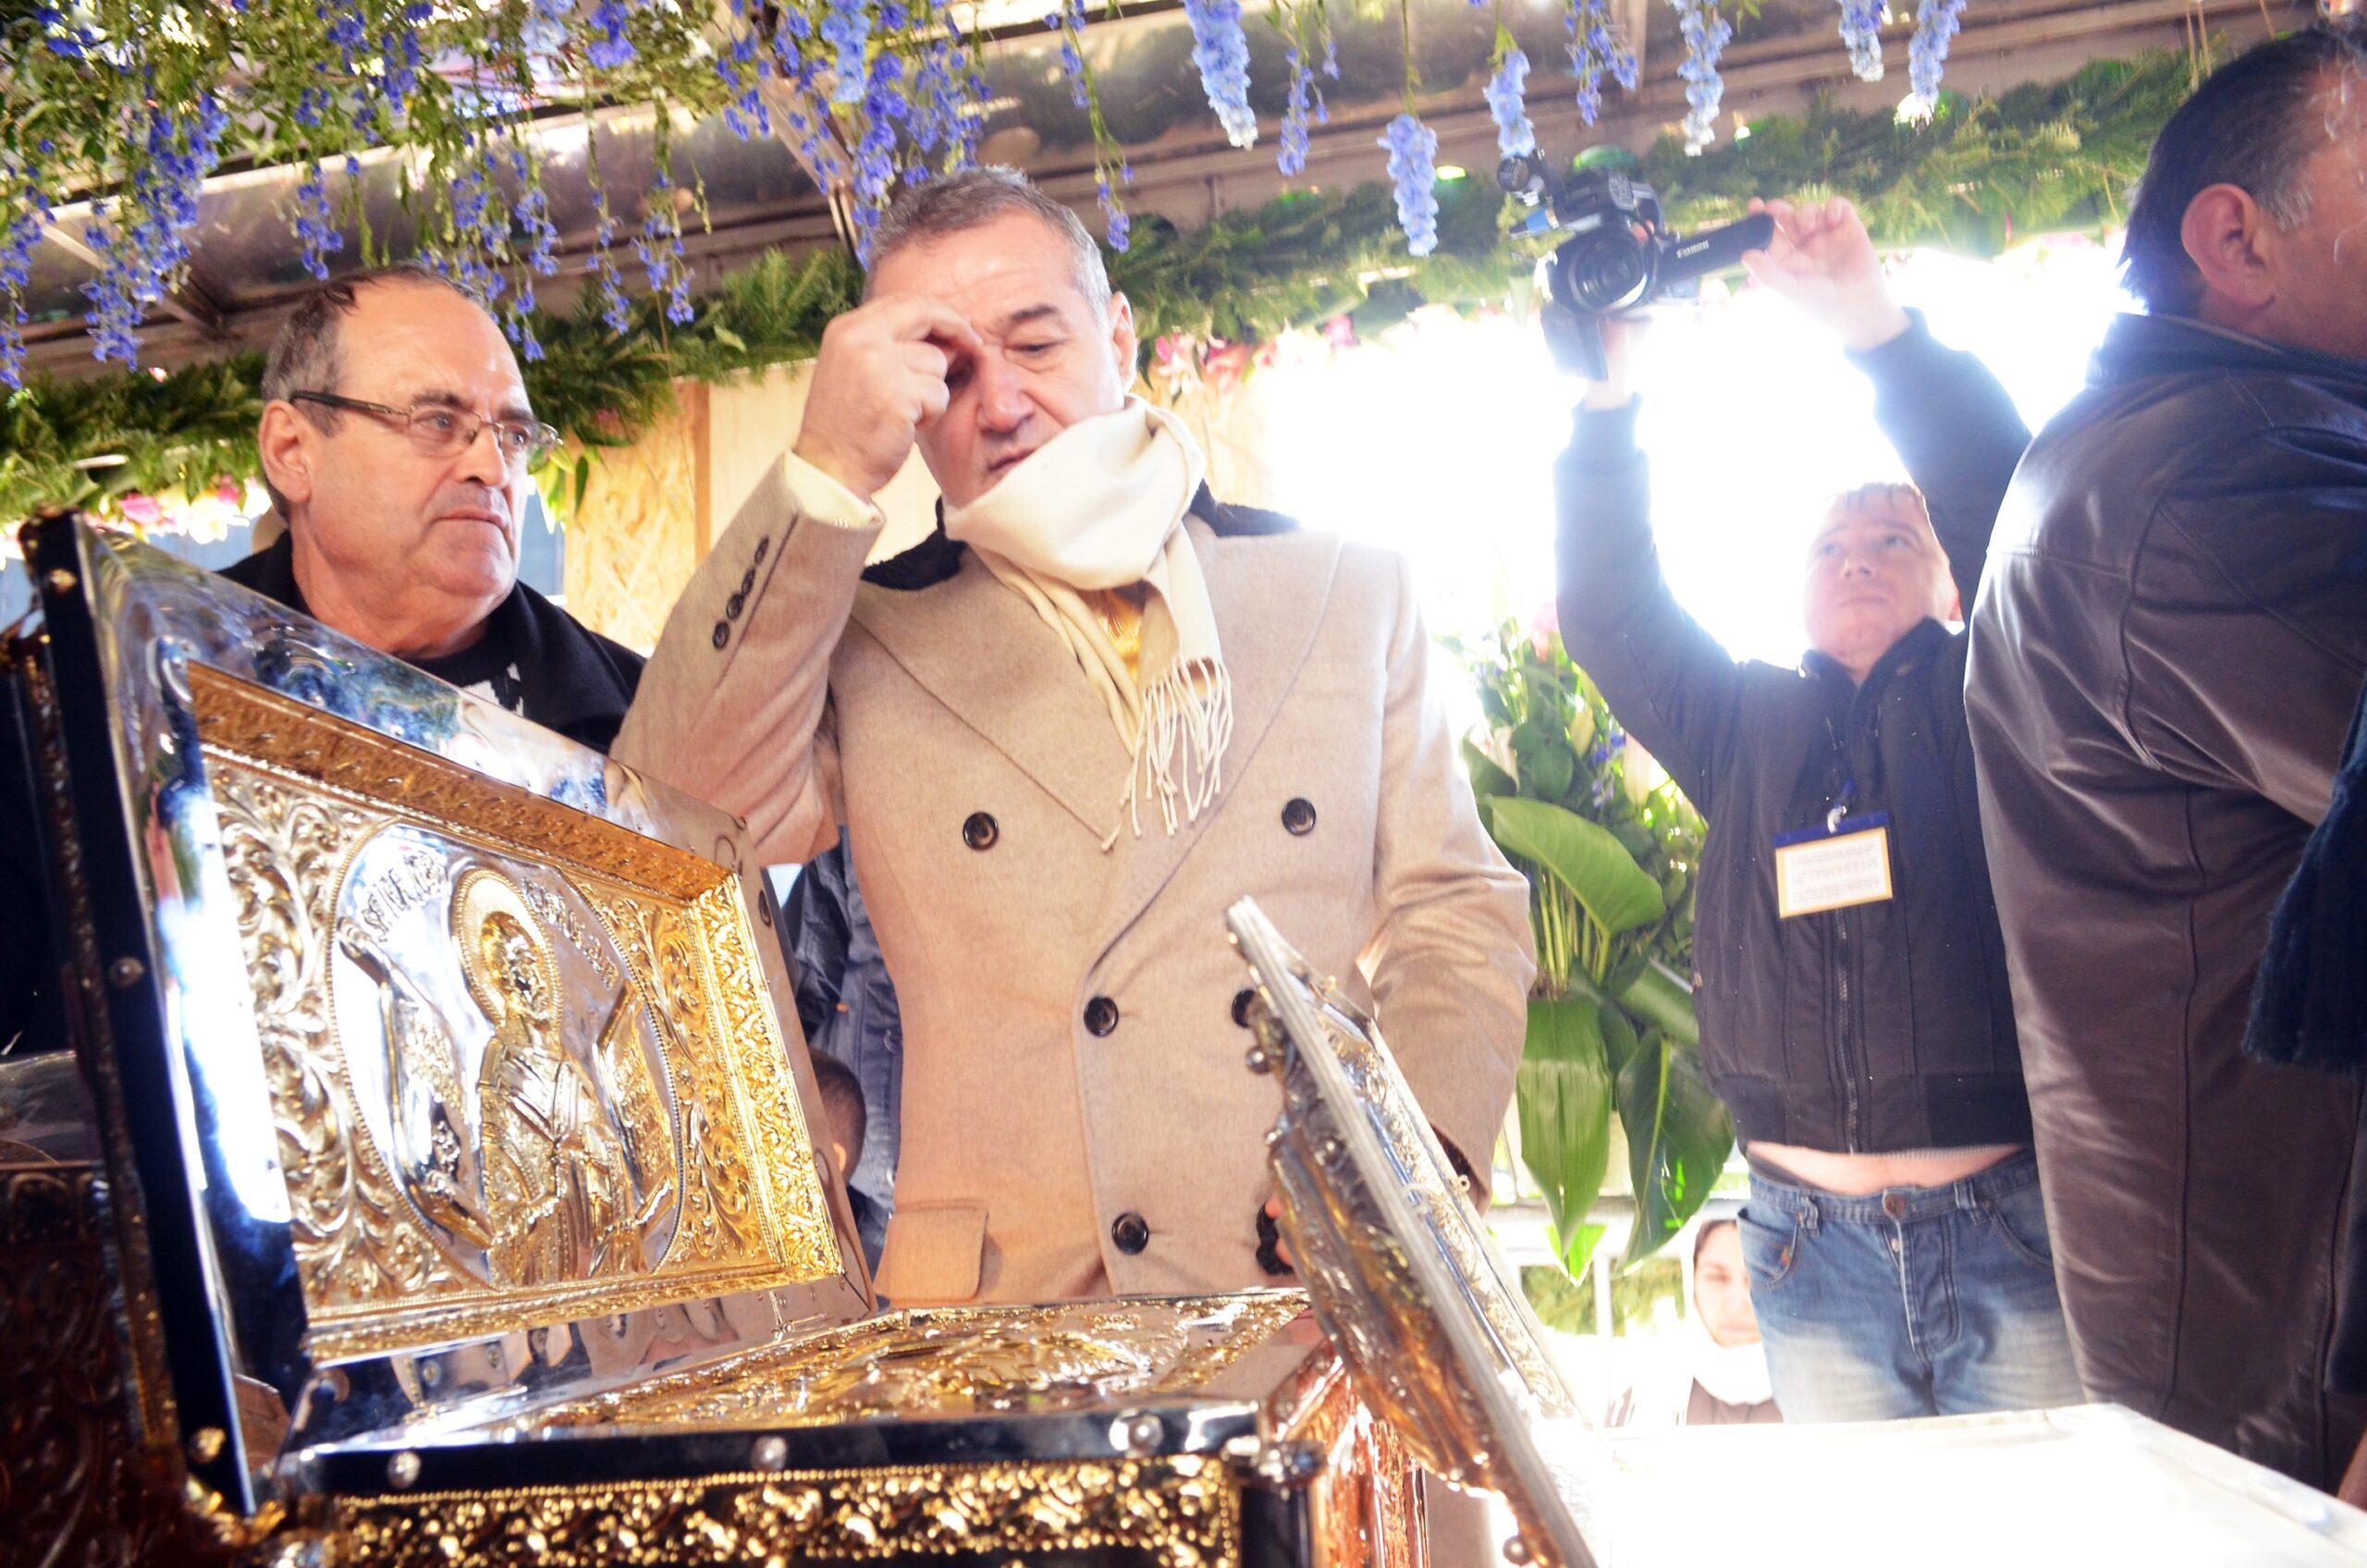 Gheorghe Becali,finantatorul echipei de fotbal Steaua Bucuresti, se roaga la moastele Sfintei Cuvioase Parascheva in curtea Catedralei Mitropolitane din Iasi, miercuri, 14 octombrie 2015. LIVIU CHIRICA / MEDIAFAX FOTO